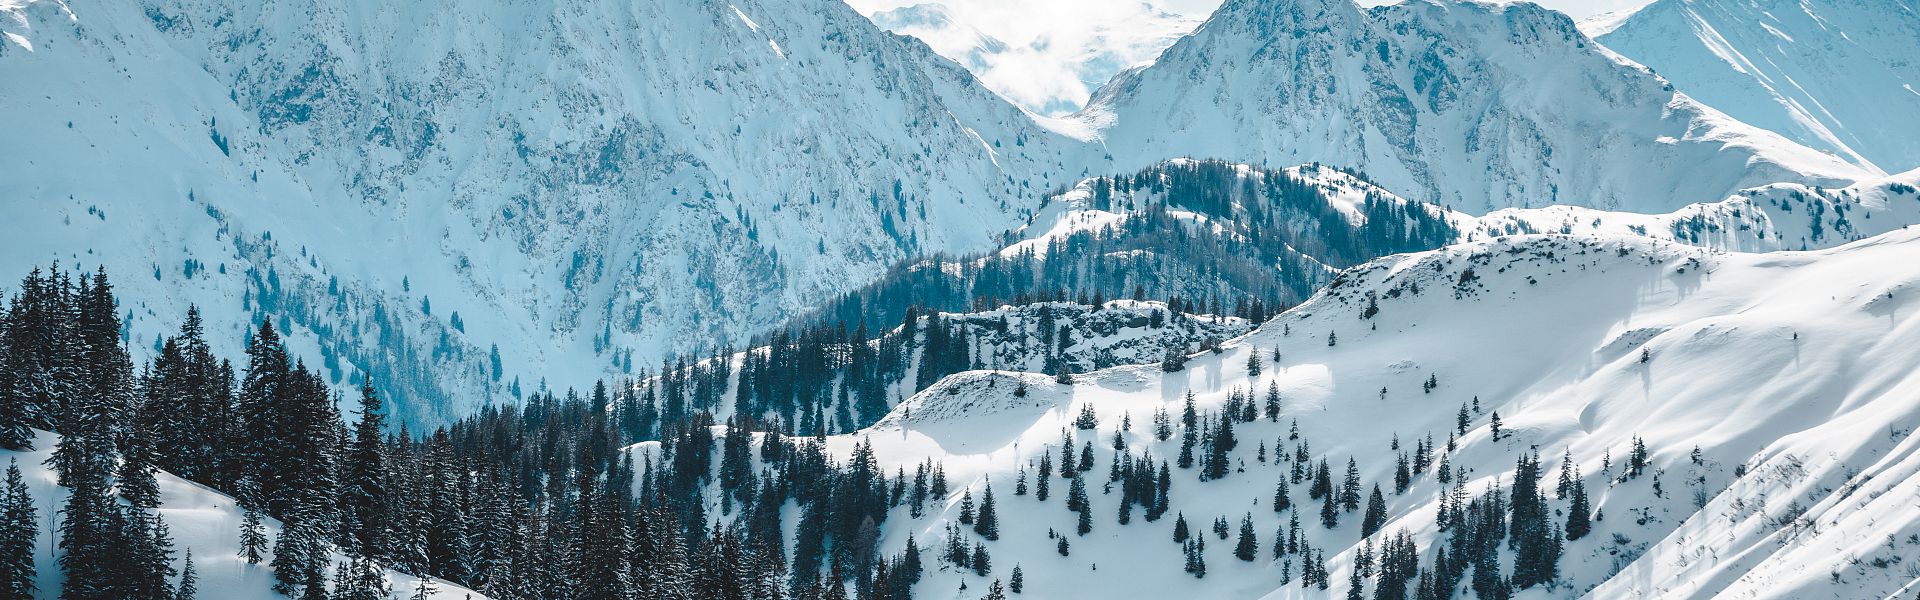 Winter allgemein 2020 (c) TVB Kitzbüheler Alpen-Brixental, Fotograf Mathäus Gartner (8)